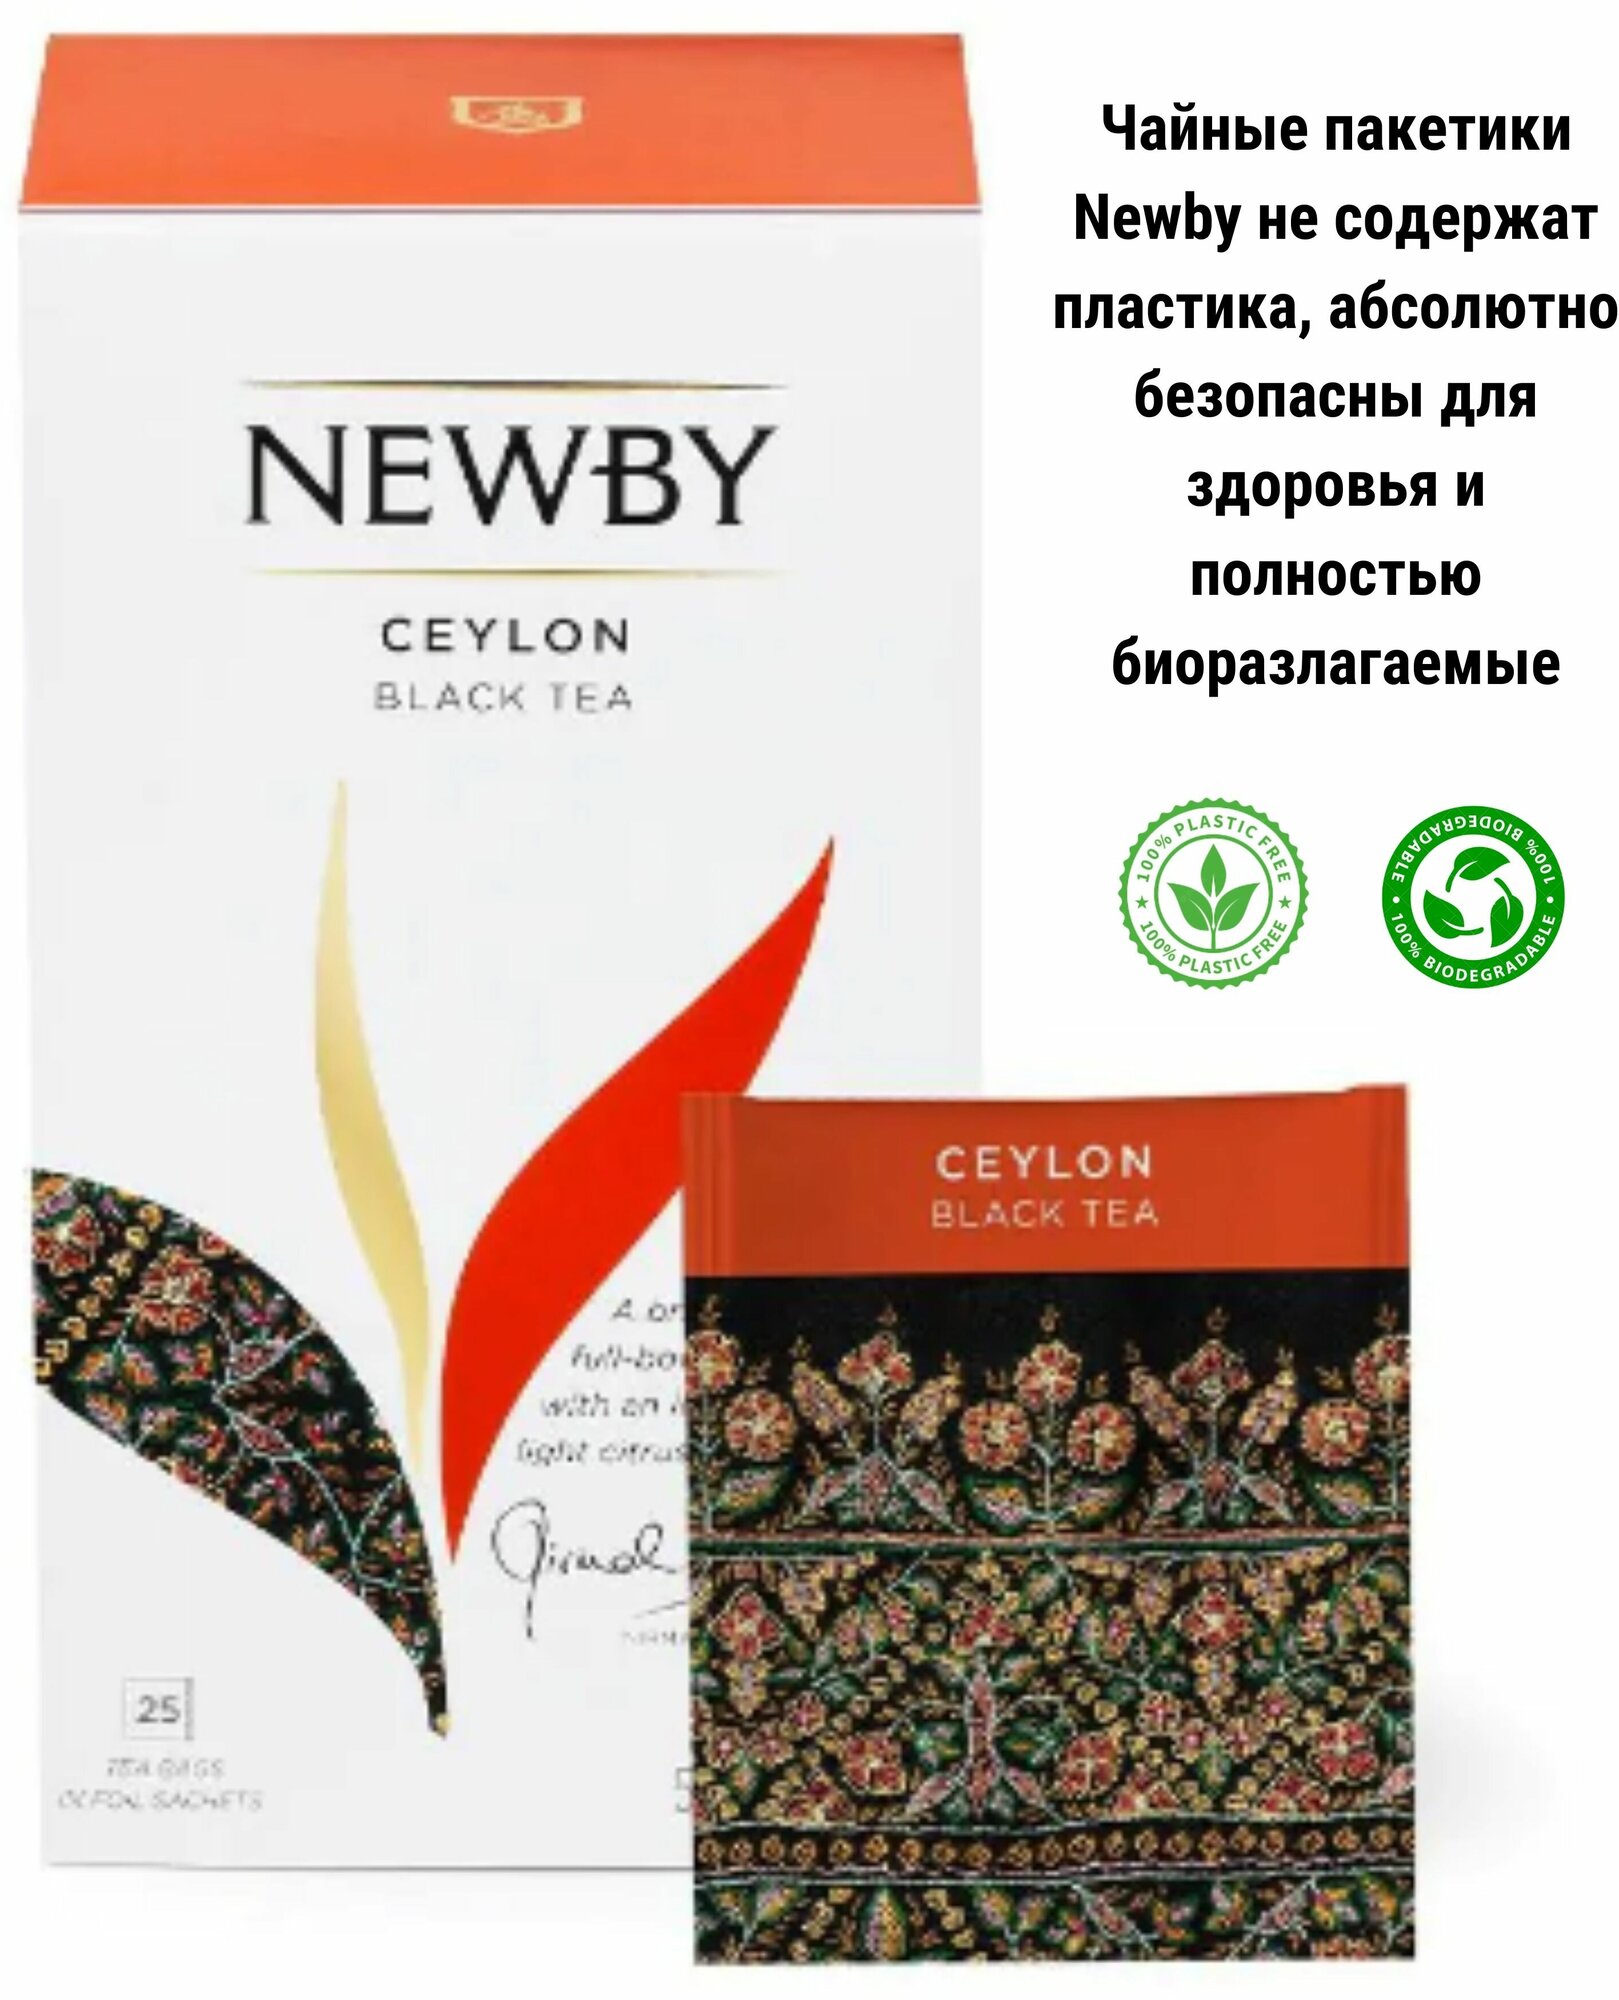 Чай Newby - фото №5